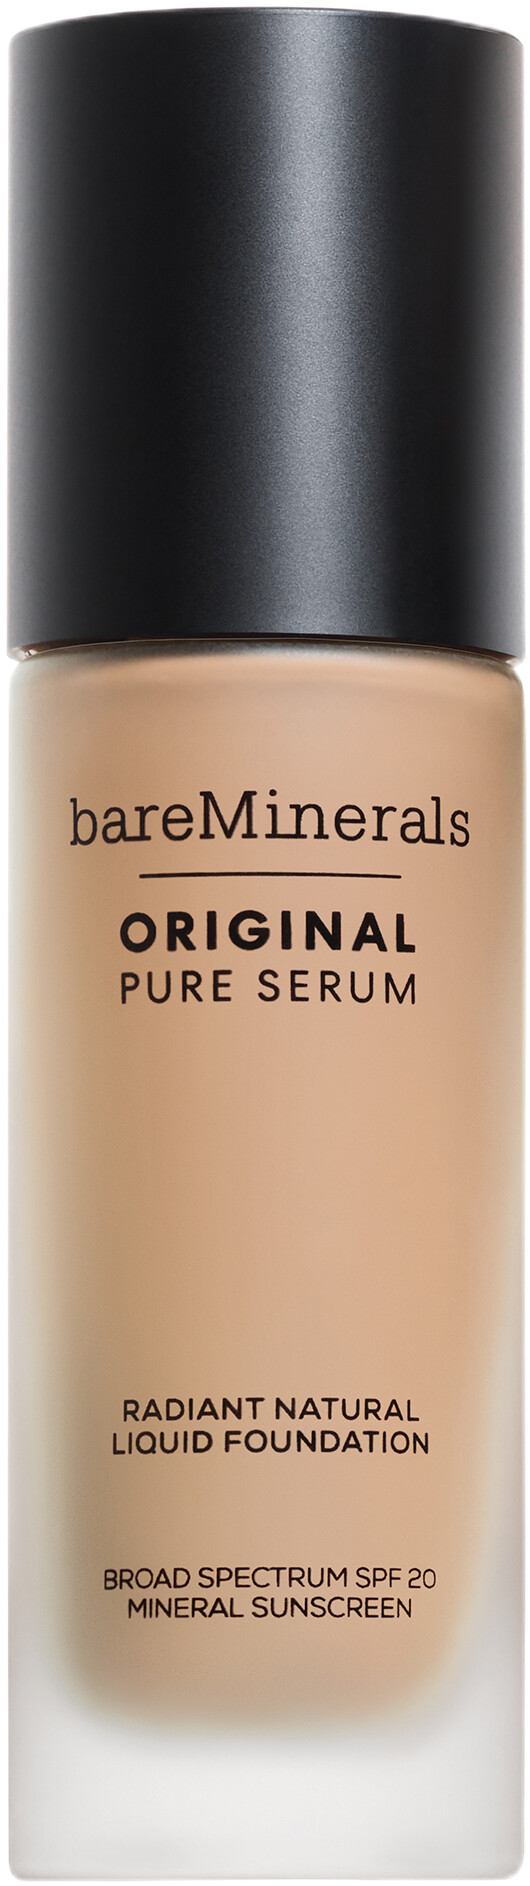 bareMinerals Original Pure Serum Radiant Natural Liquid Foundation SPF20 30ml 2 - Light Neutral